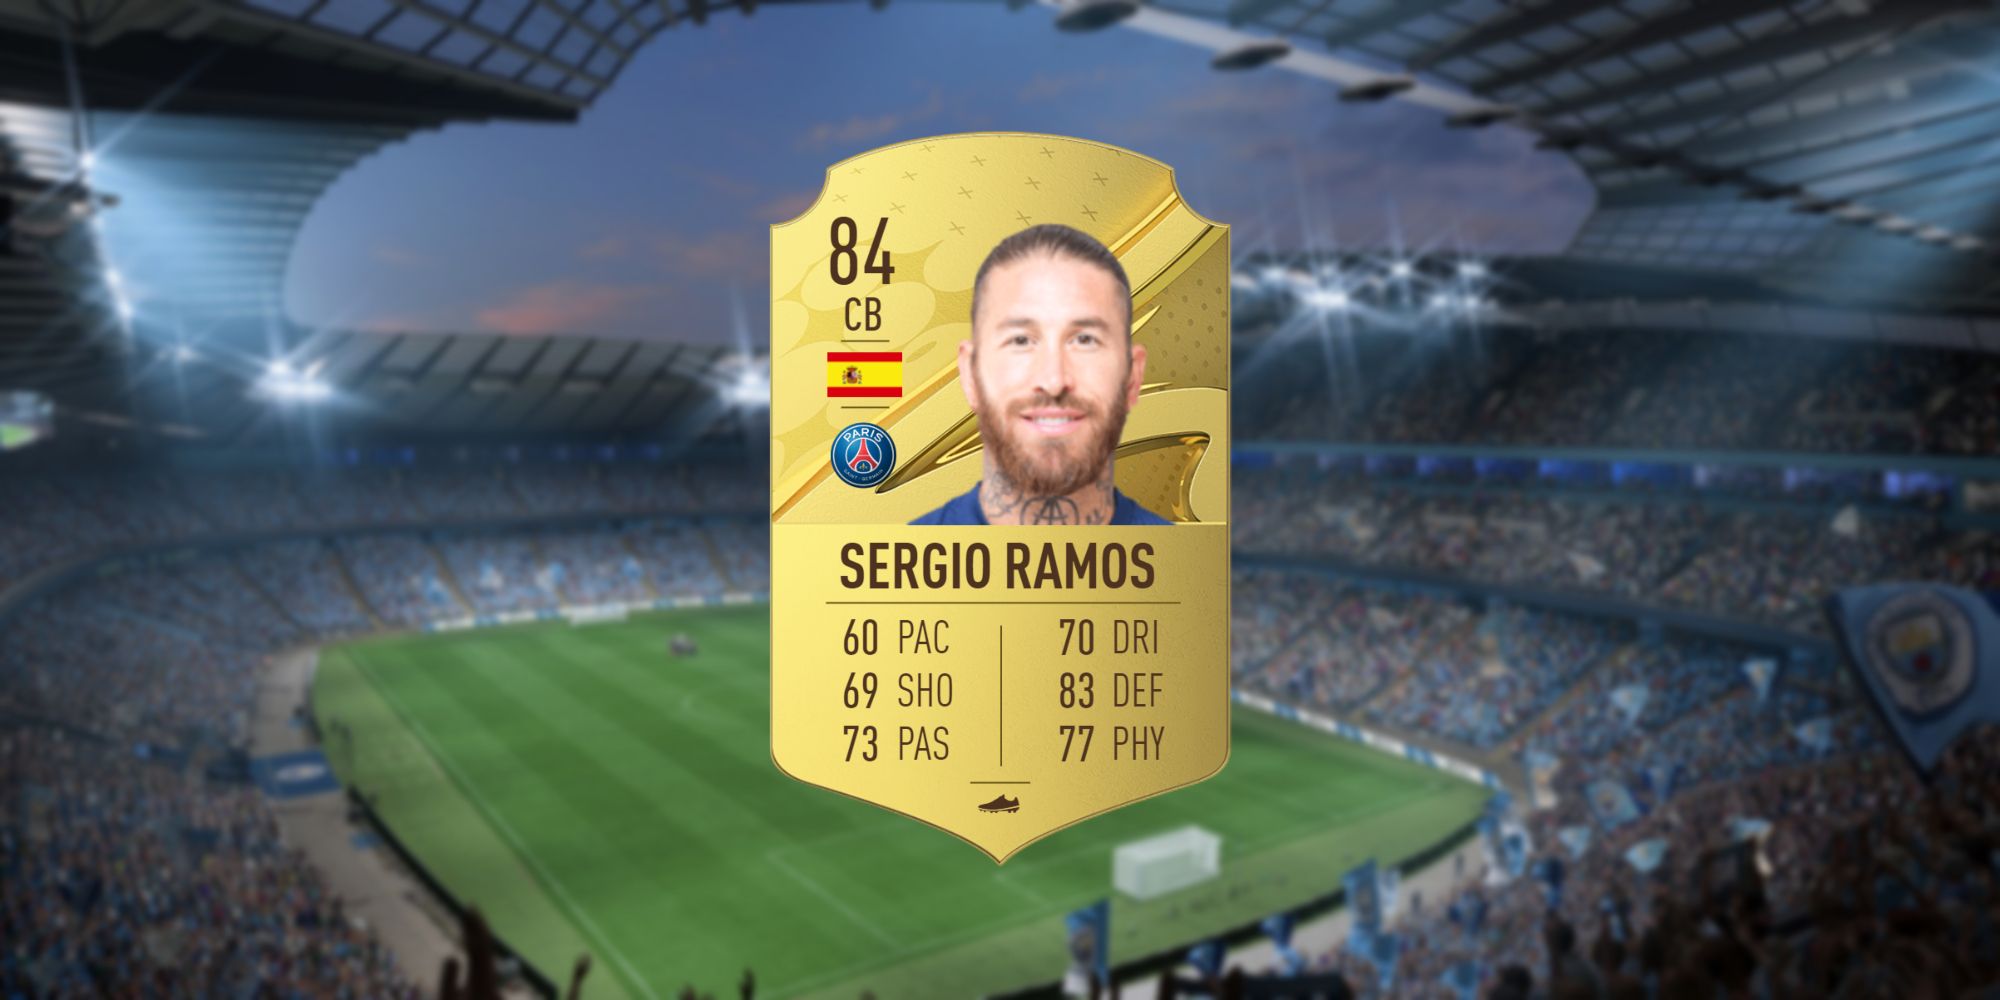 An image of Sergio Ramos's FIFA 23 Card